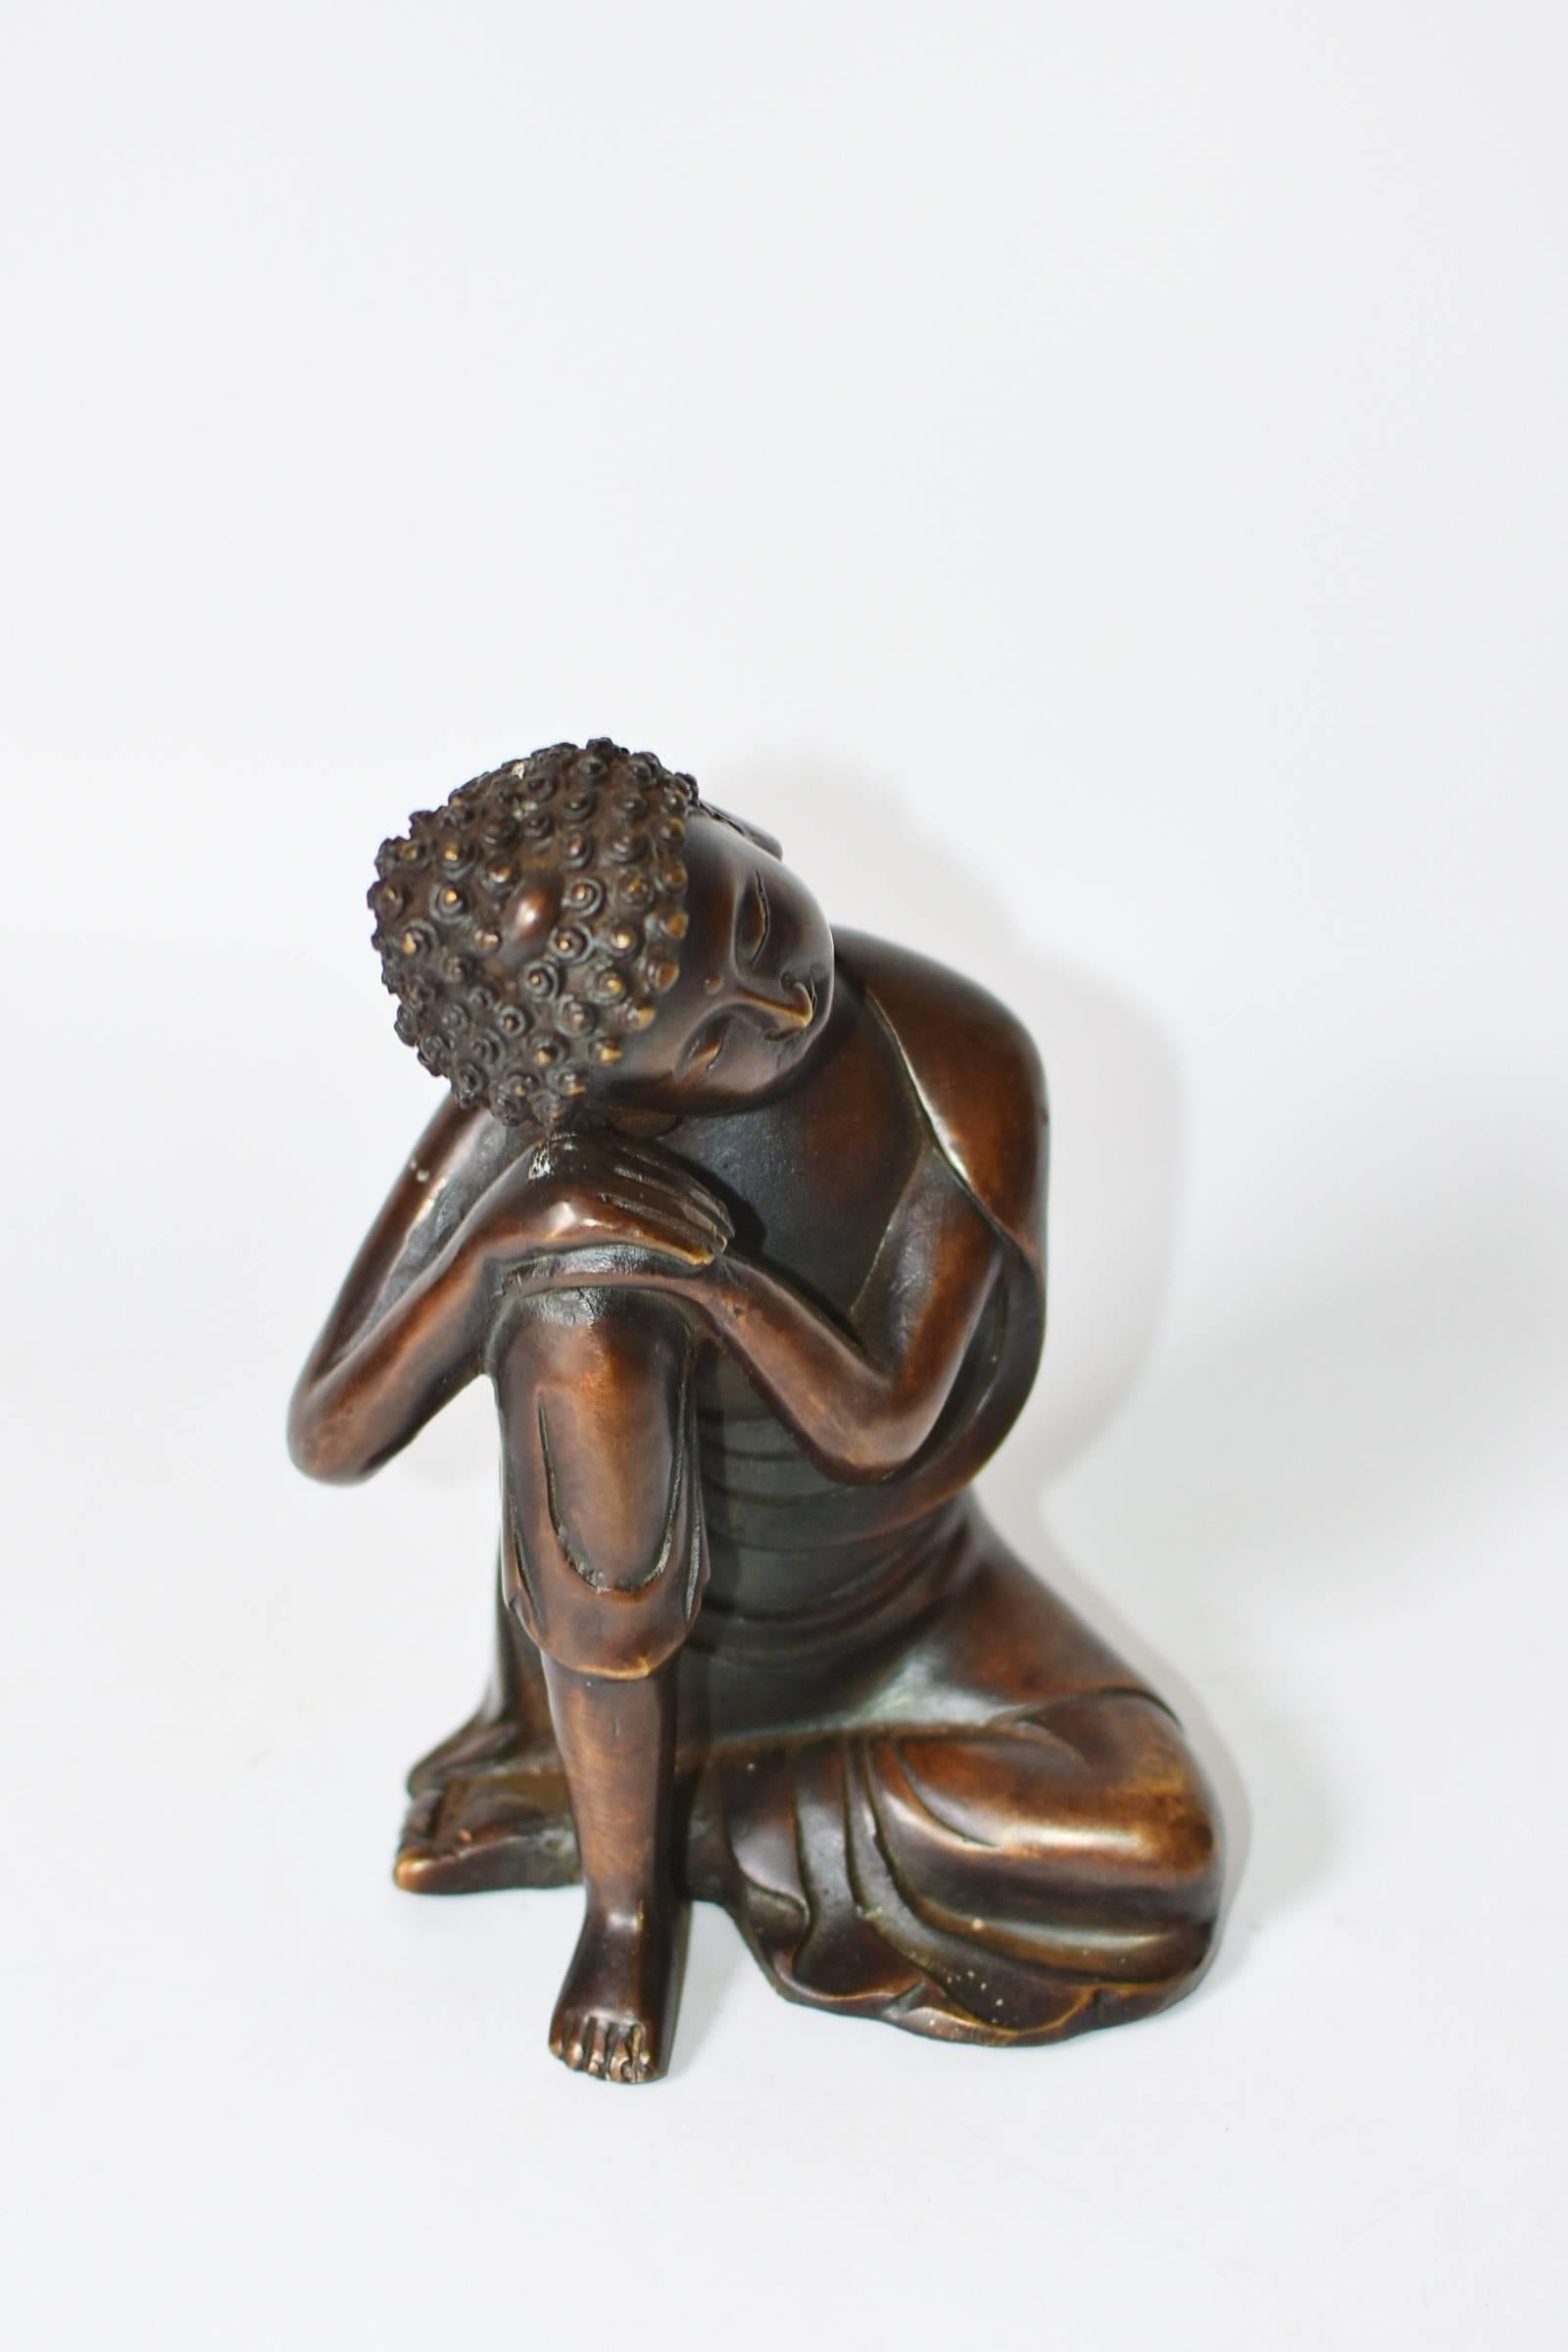 Contemporary Bronze Buddha Statue, a Thinking Buddha